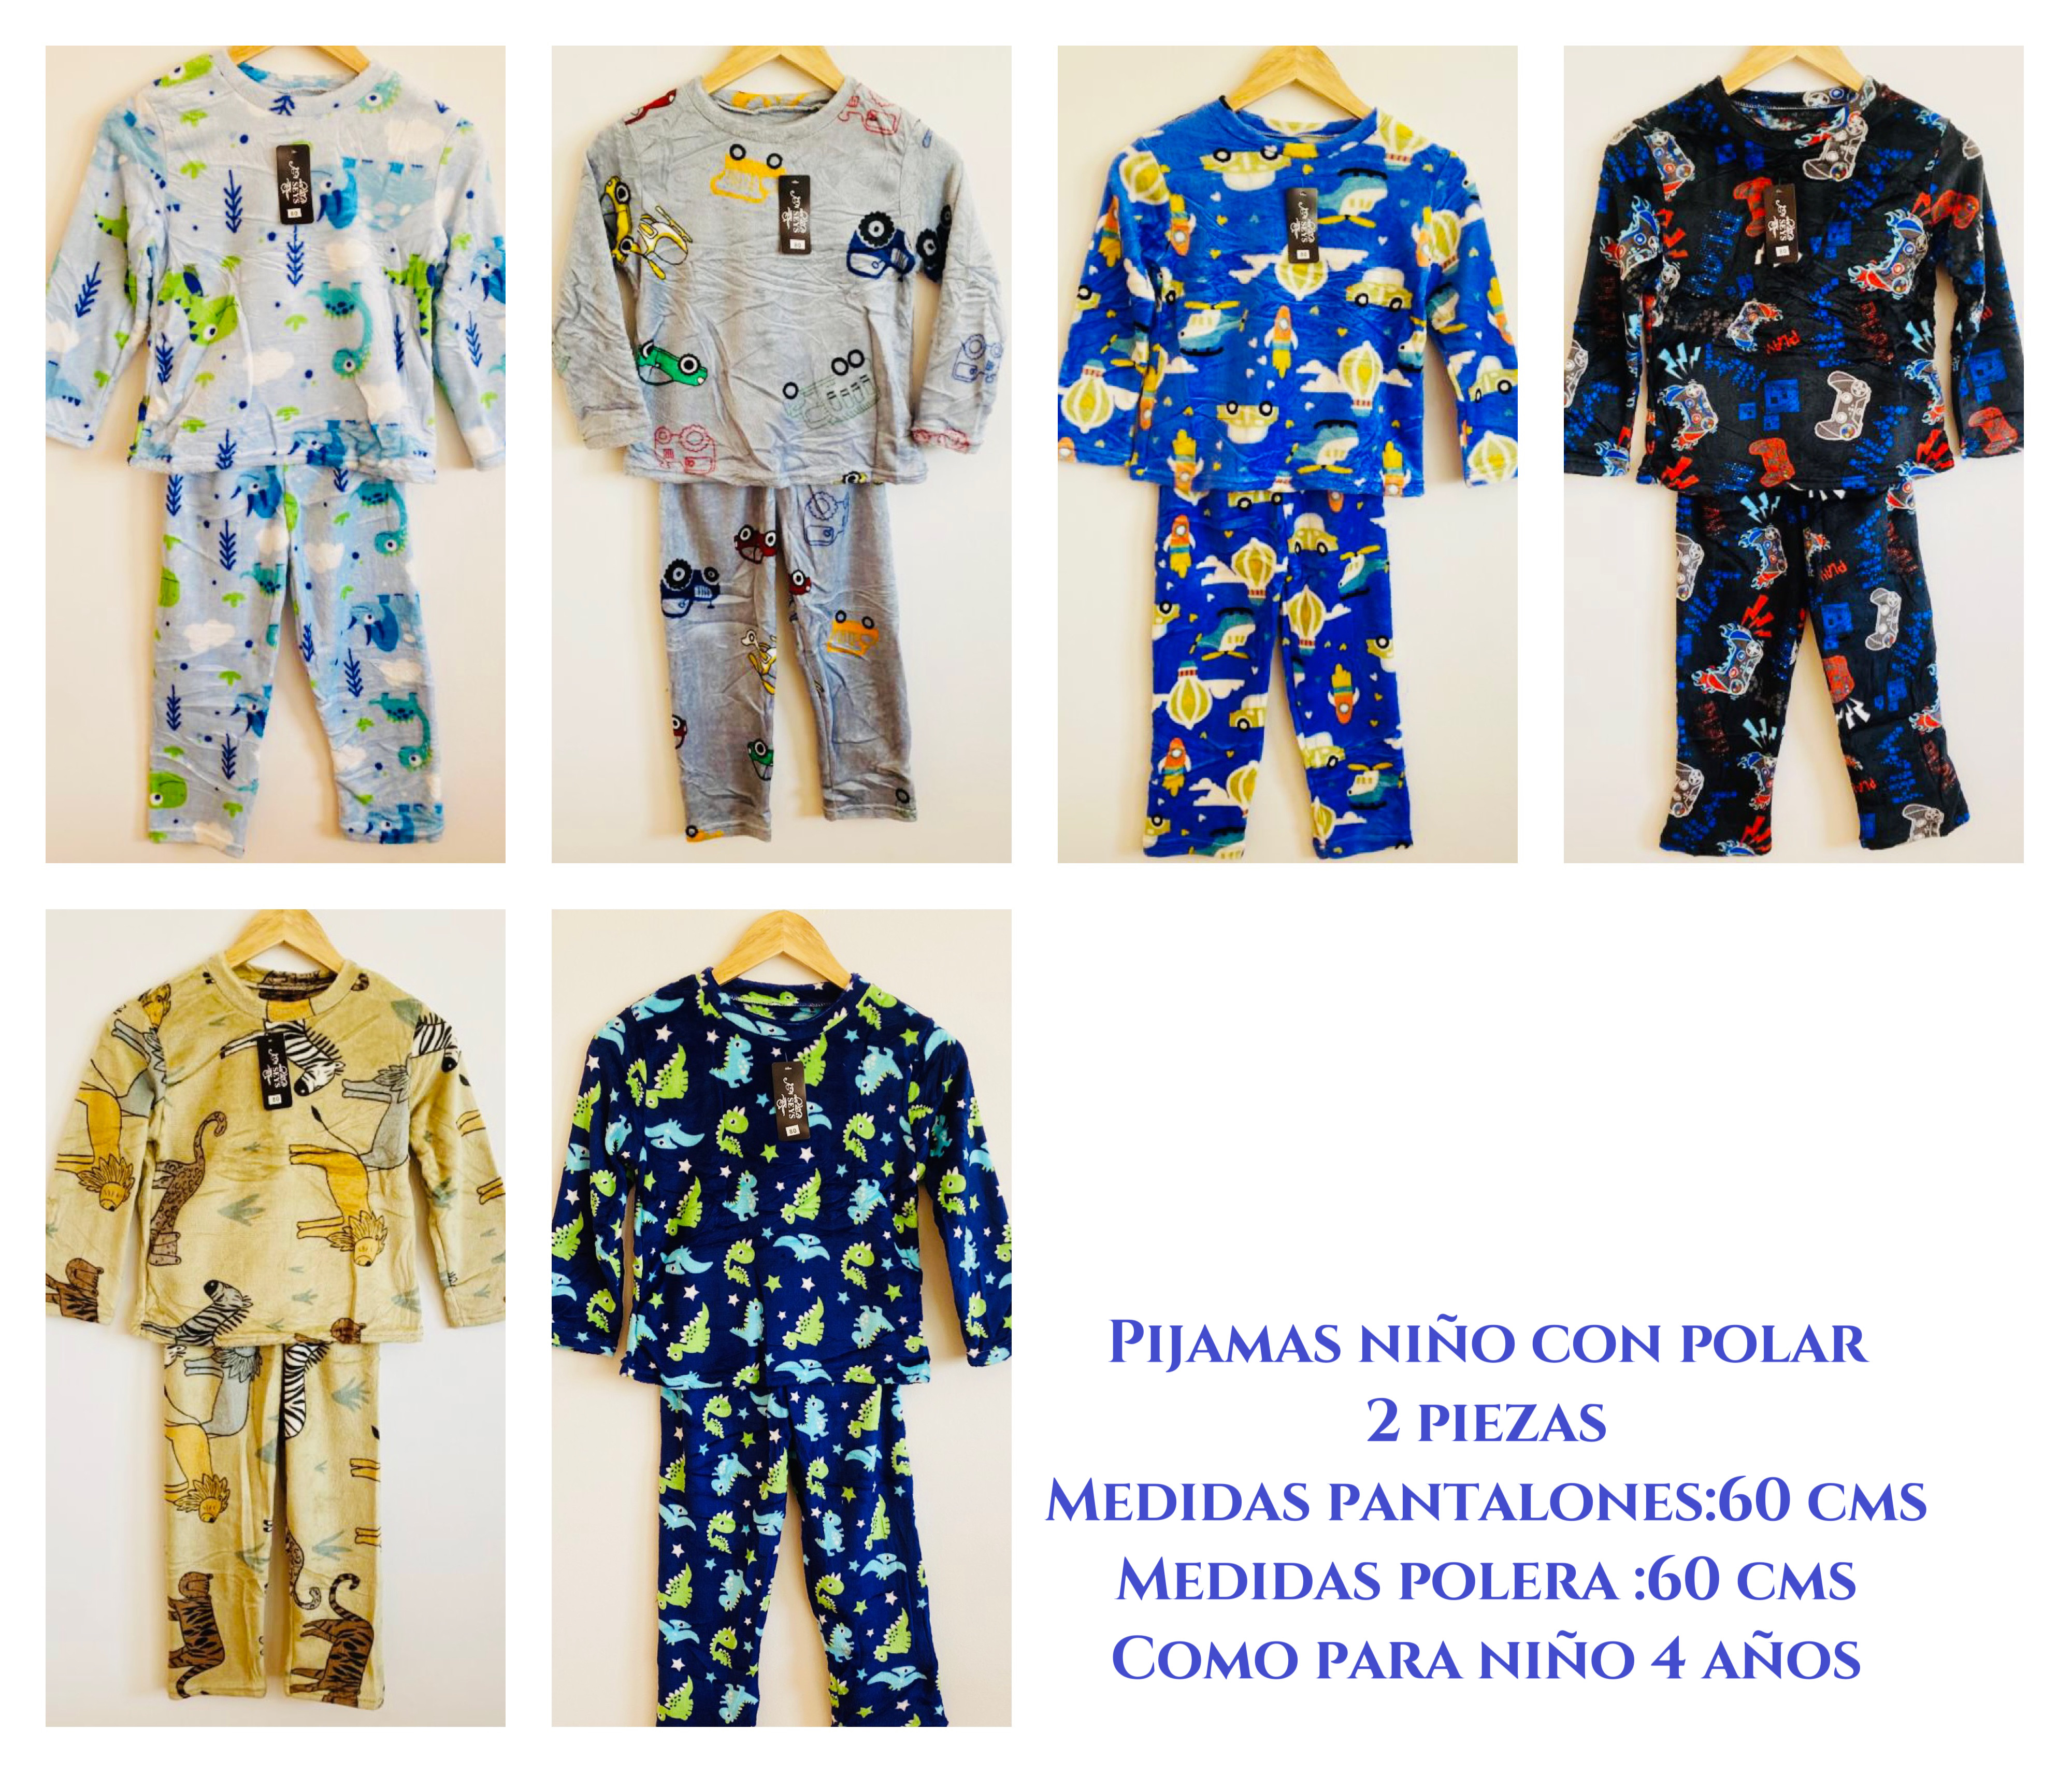 Pijamas niño con polar talla única como para 4 años .diseños